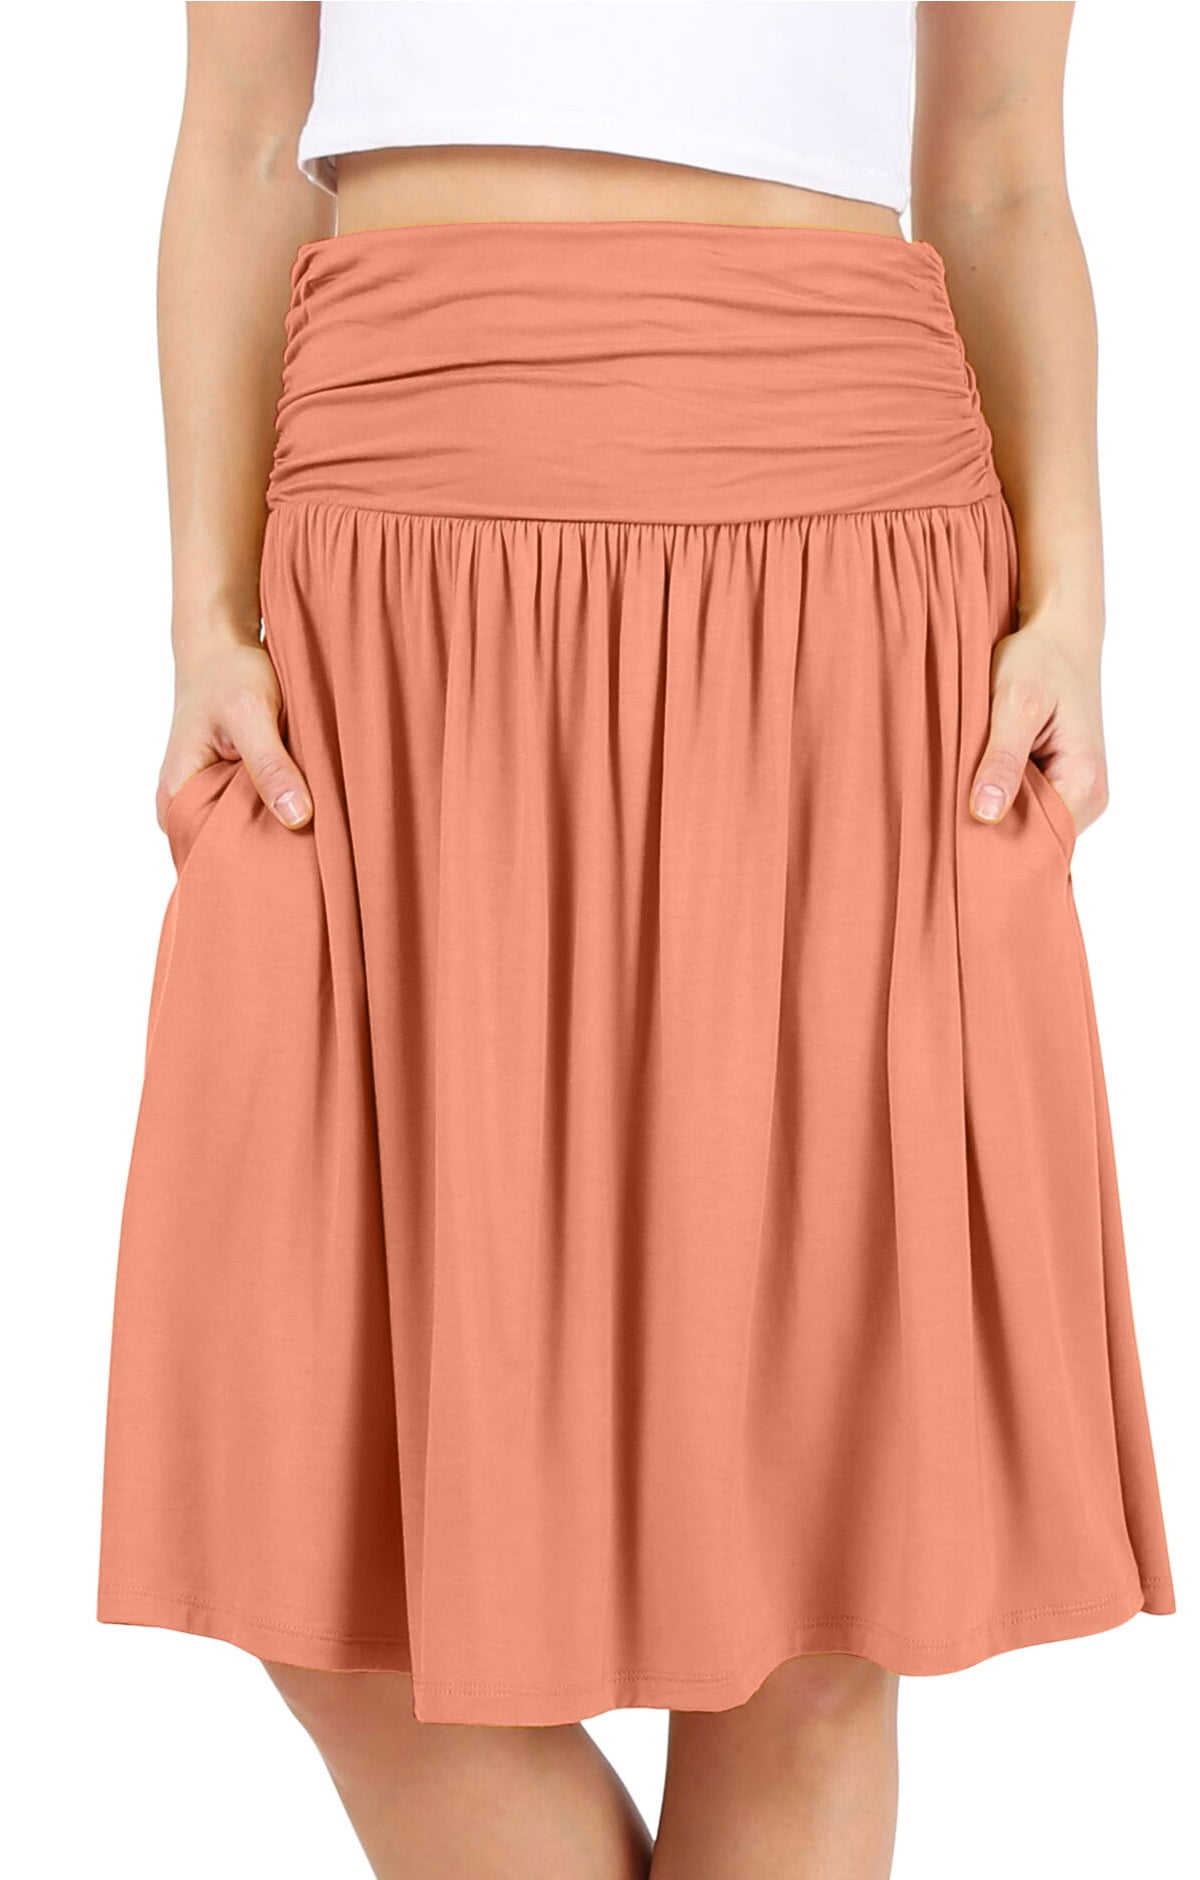 Simlu - Womens Regular And Plus Size Skirt with Pockets Knee Length ...